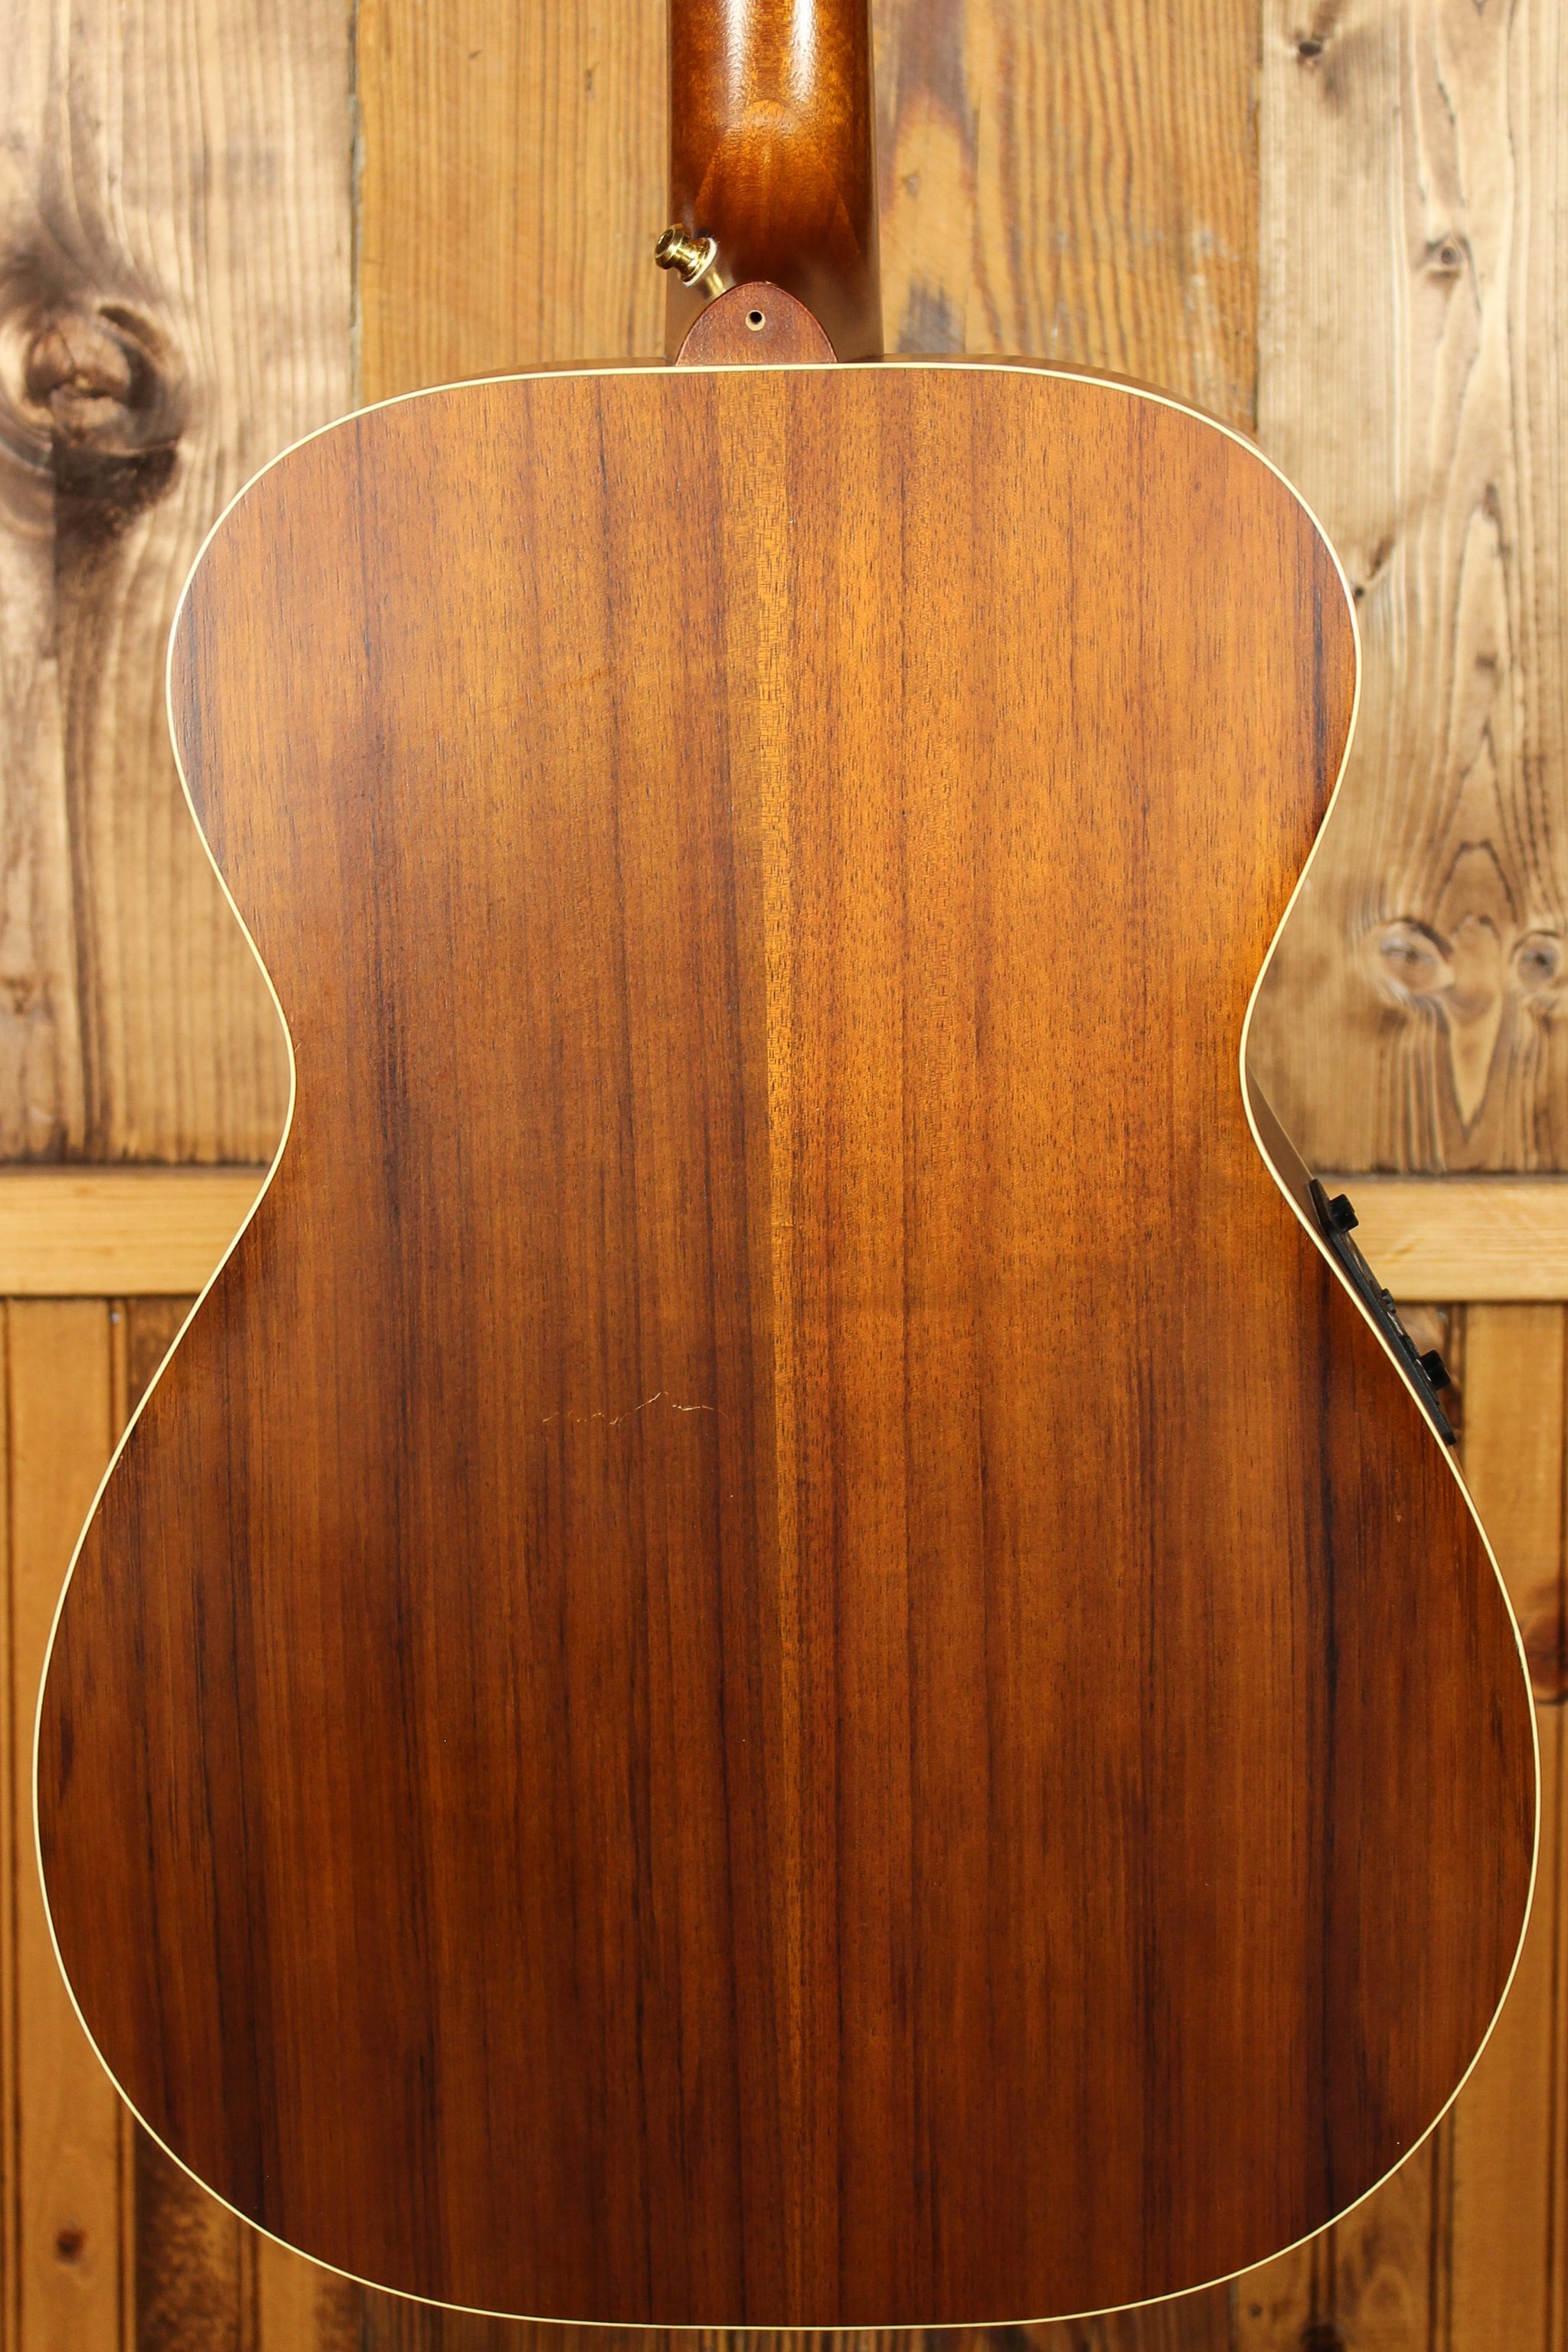 Maton EBG808 Nashville Series Sitka Spruce and Australian Blackwood Pre-Owned 2017 ID-13750 - Artisan Guitars